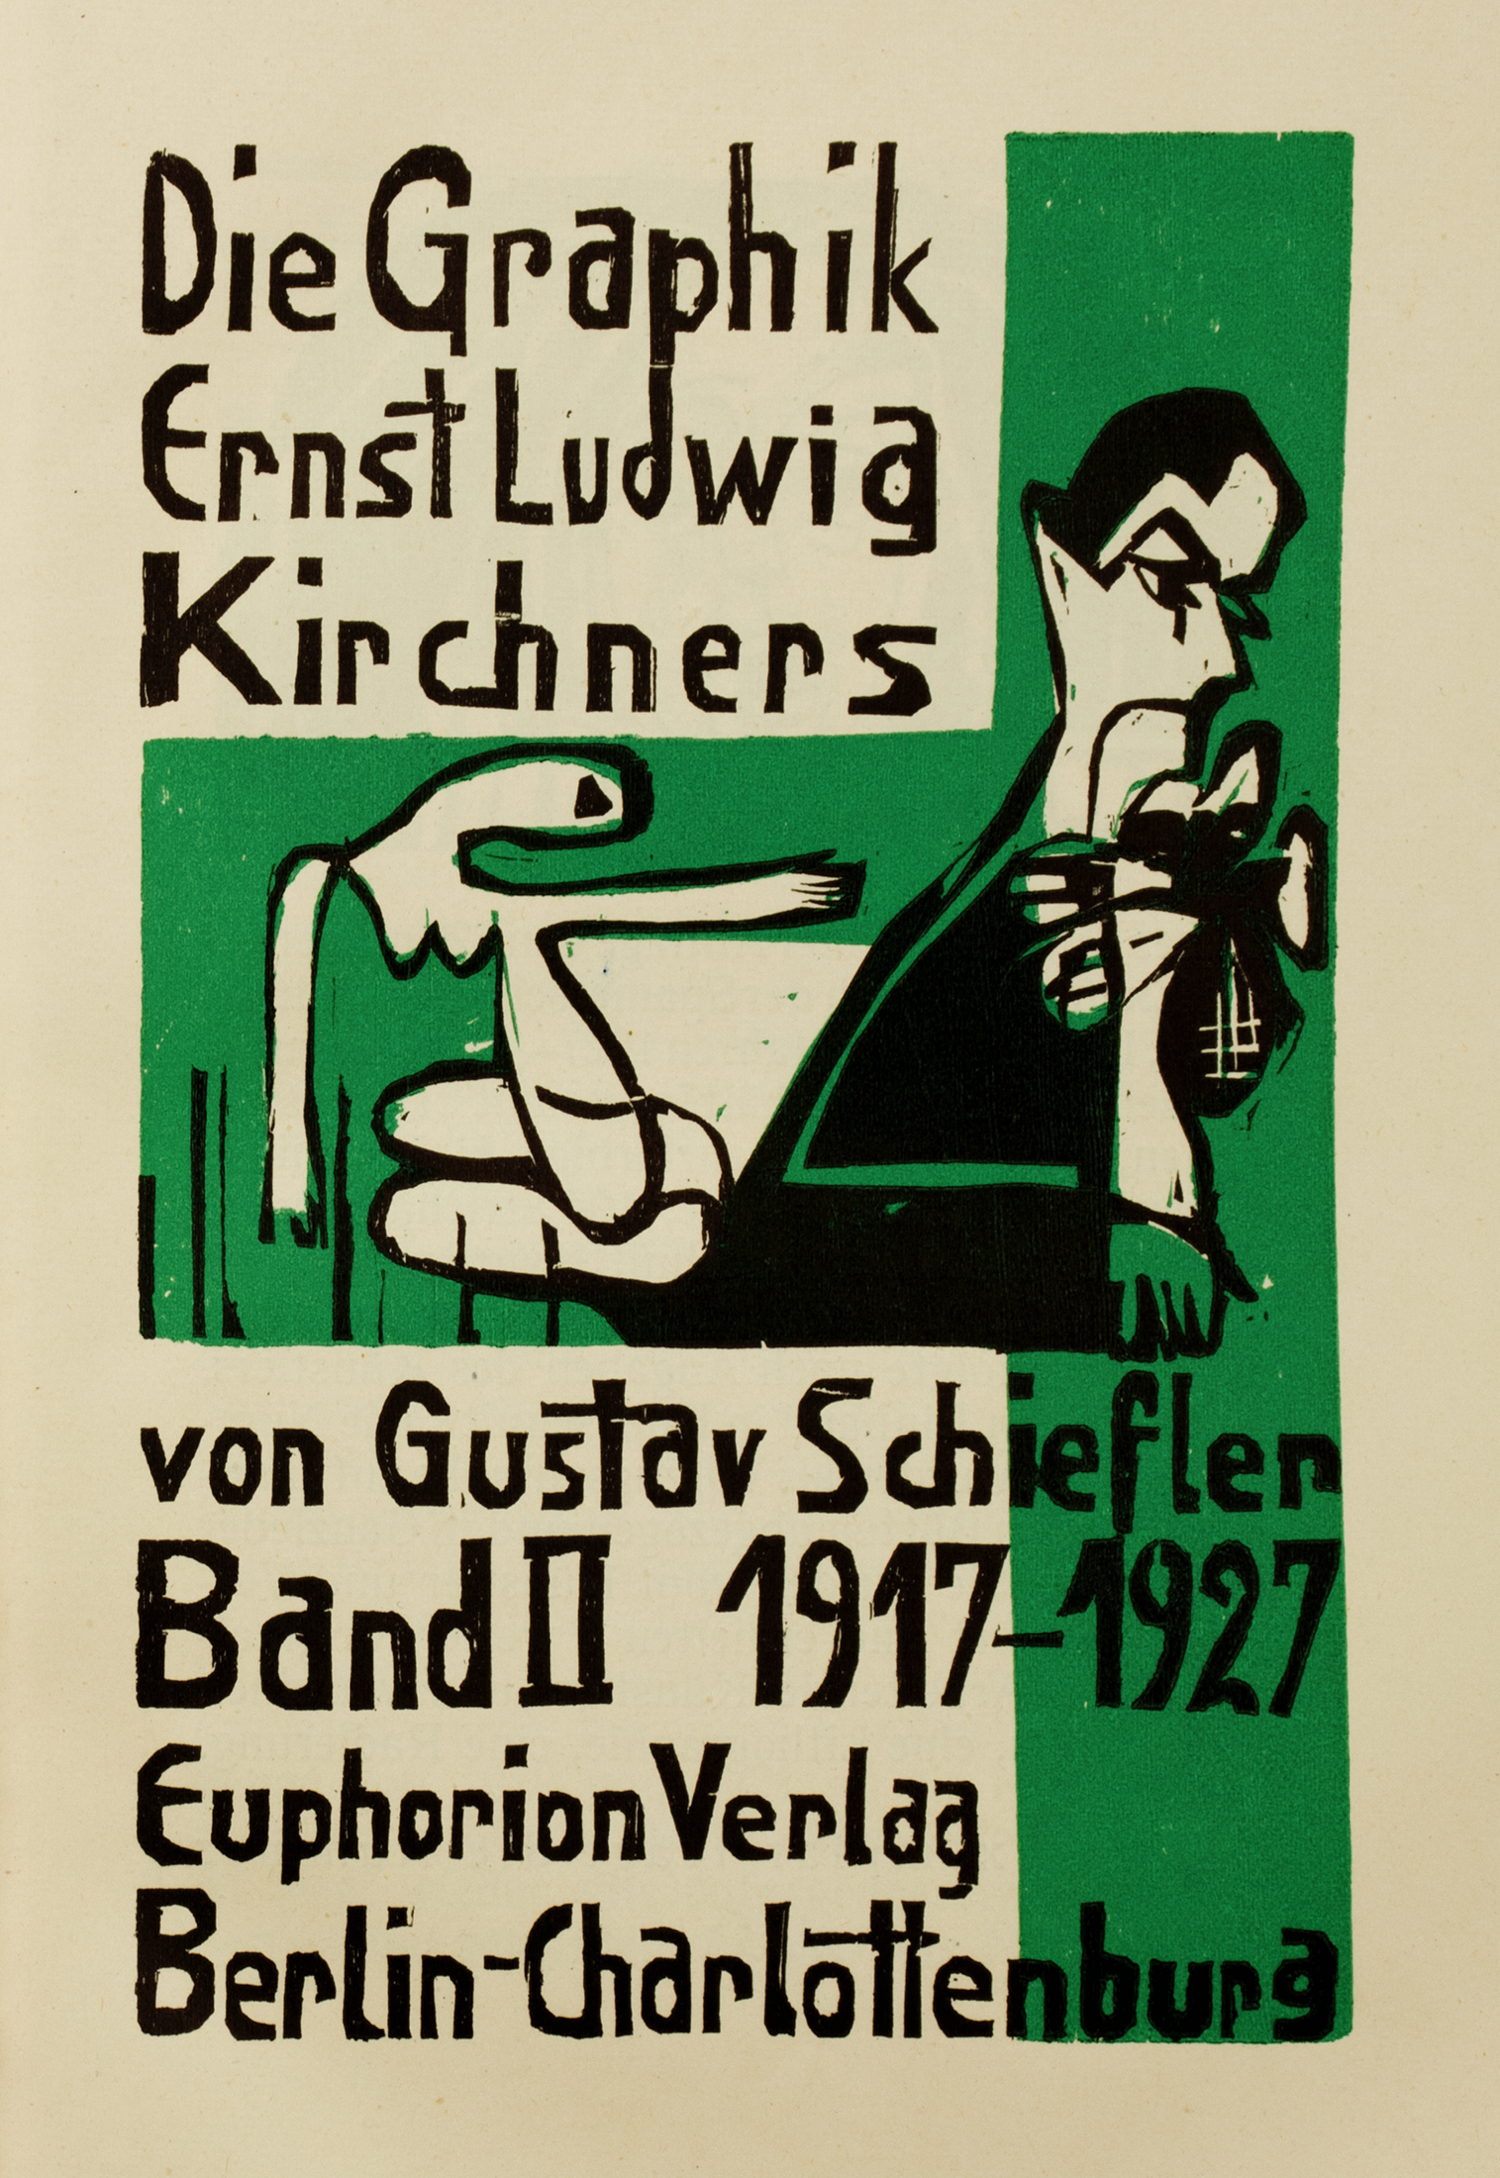 Ernst Ludwig Kirchner - Gustav Schiefler. Die Graphik Ernst Ludwig Kirchners bis 1924. - Image 3 of 12